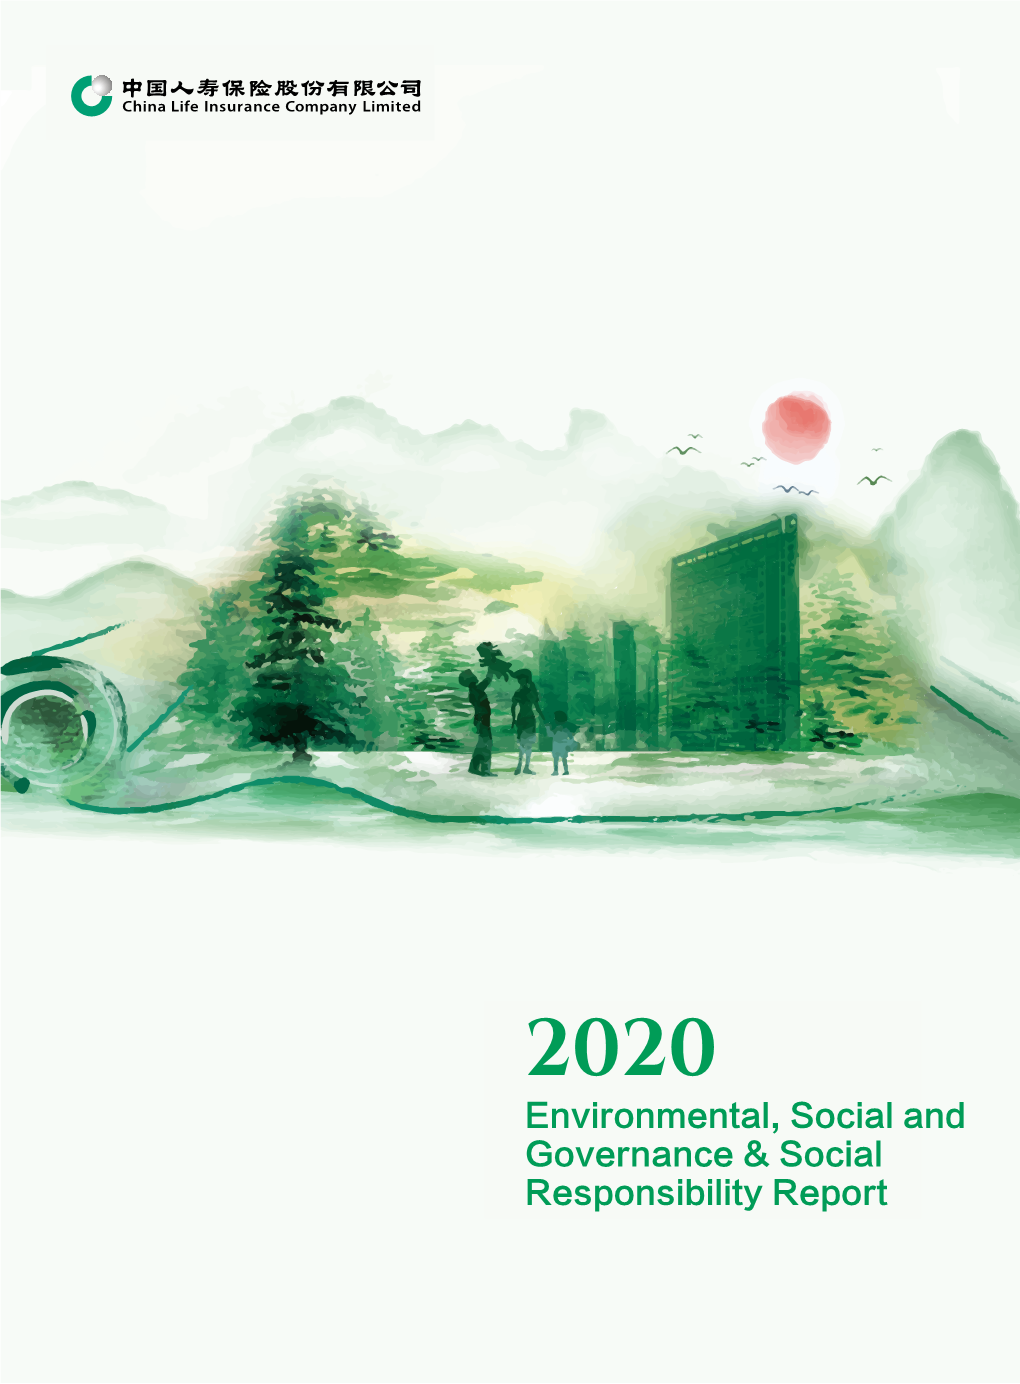 Environmental, Social and Governance & Social Responsibility